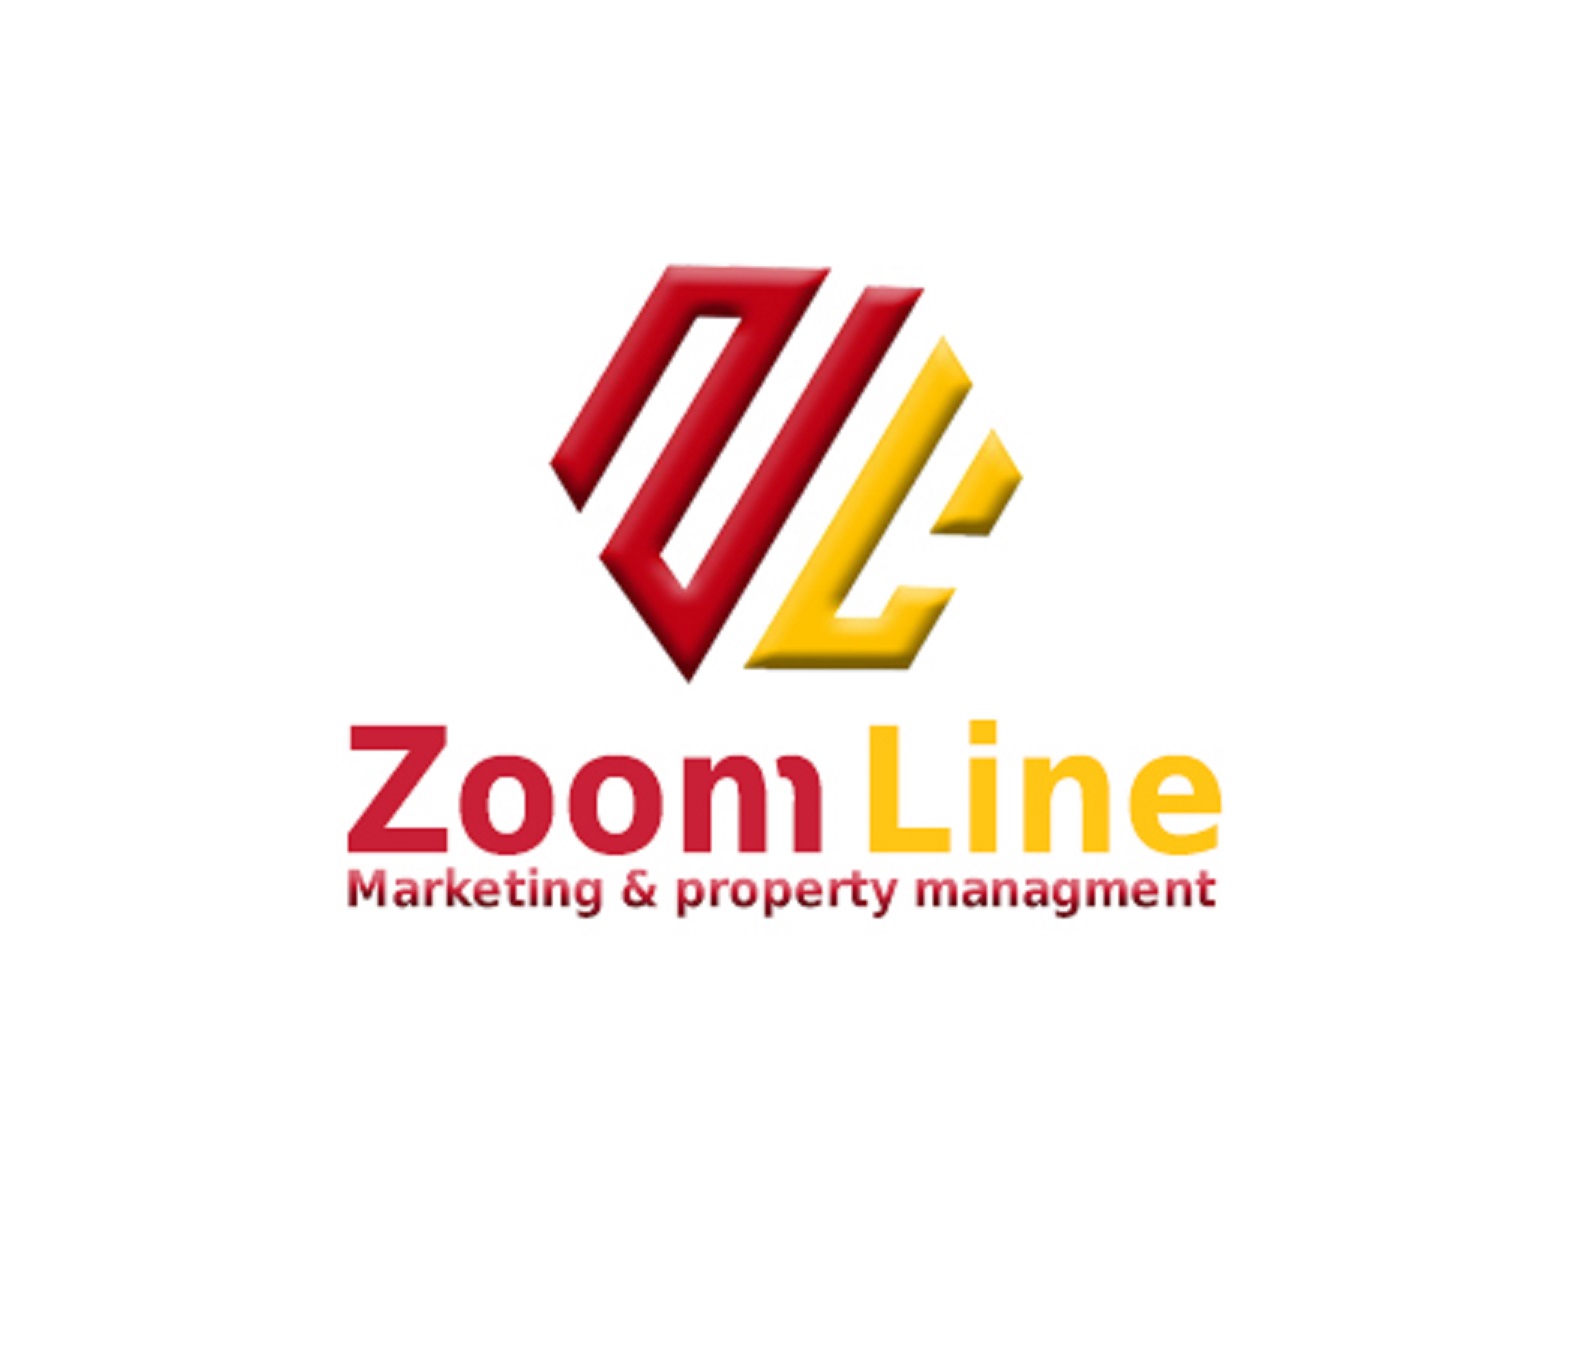 Zoom line Marketing